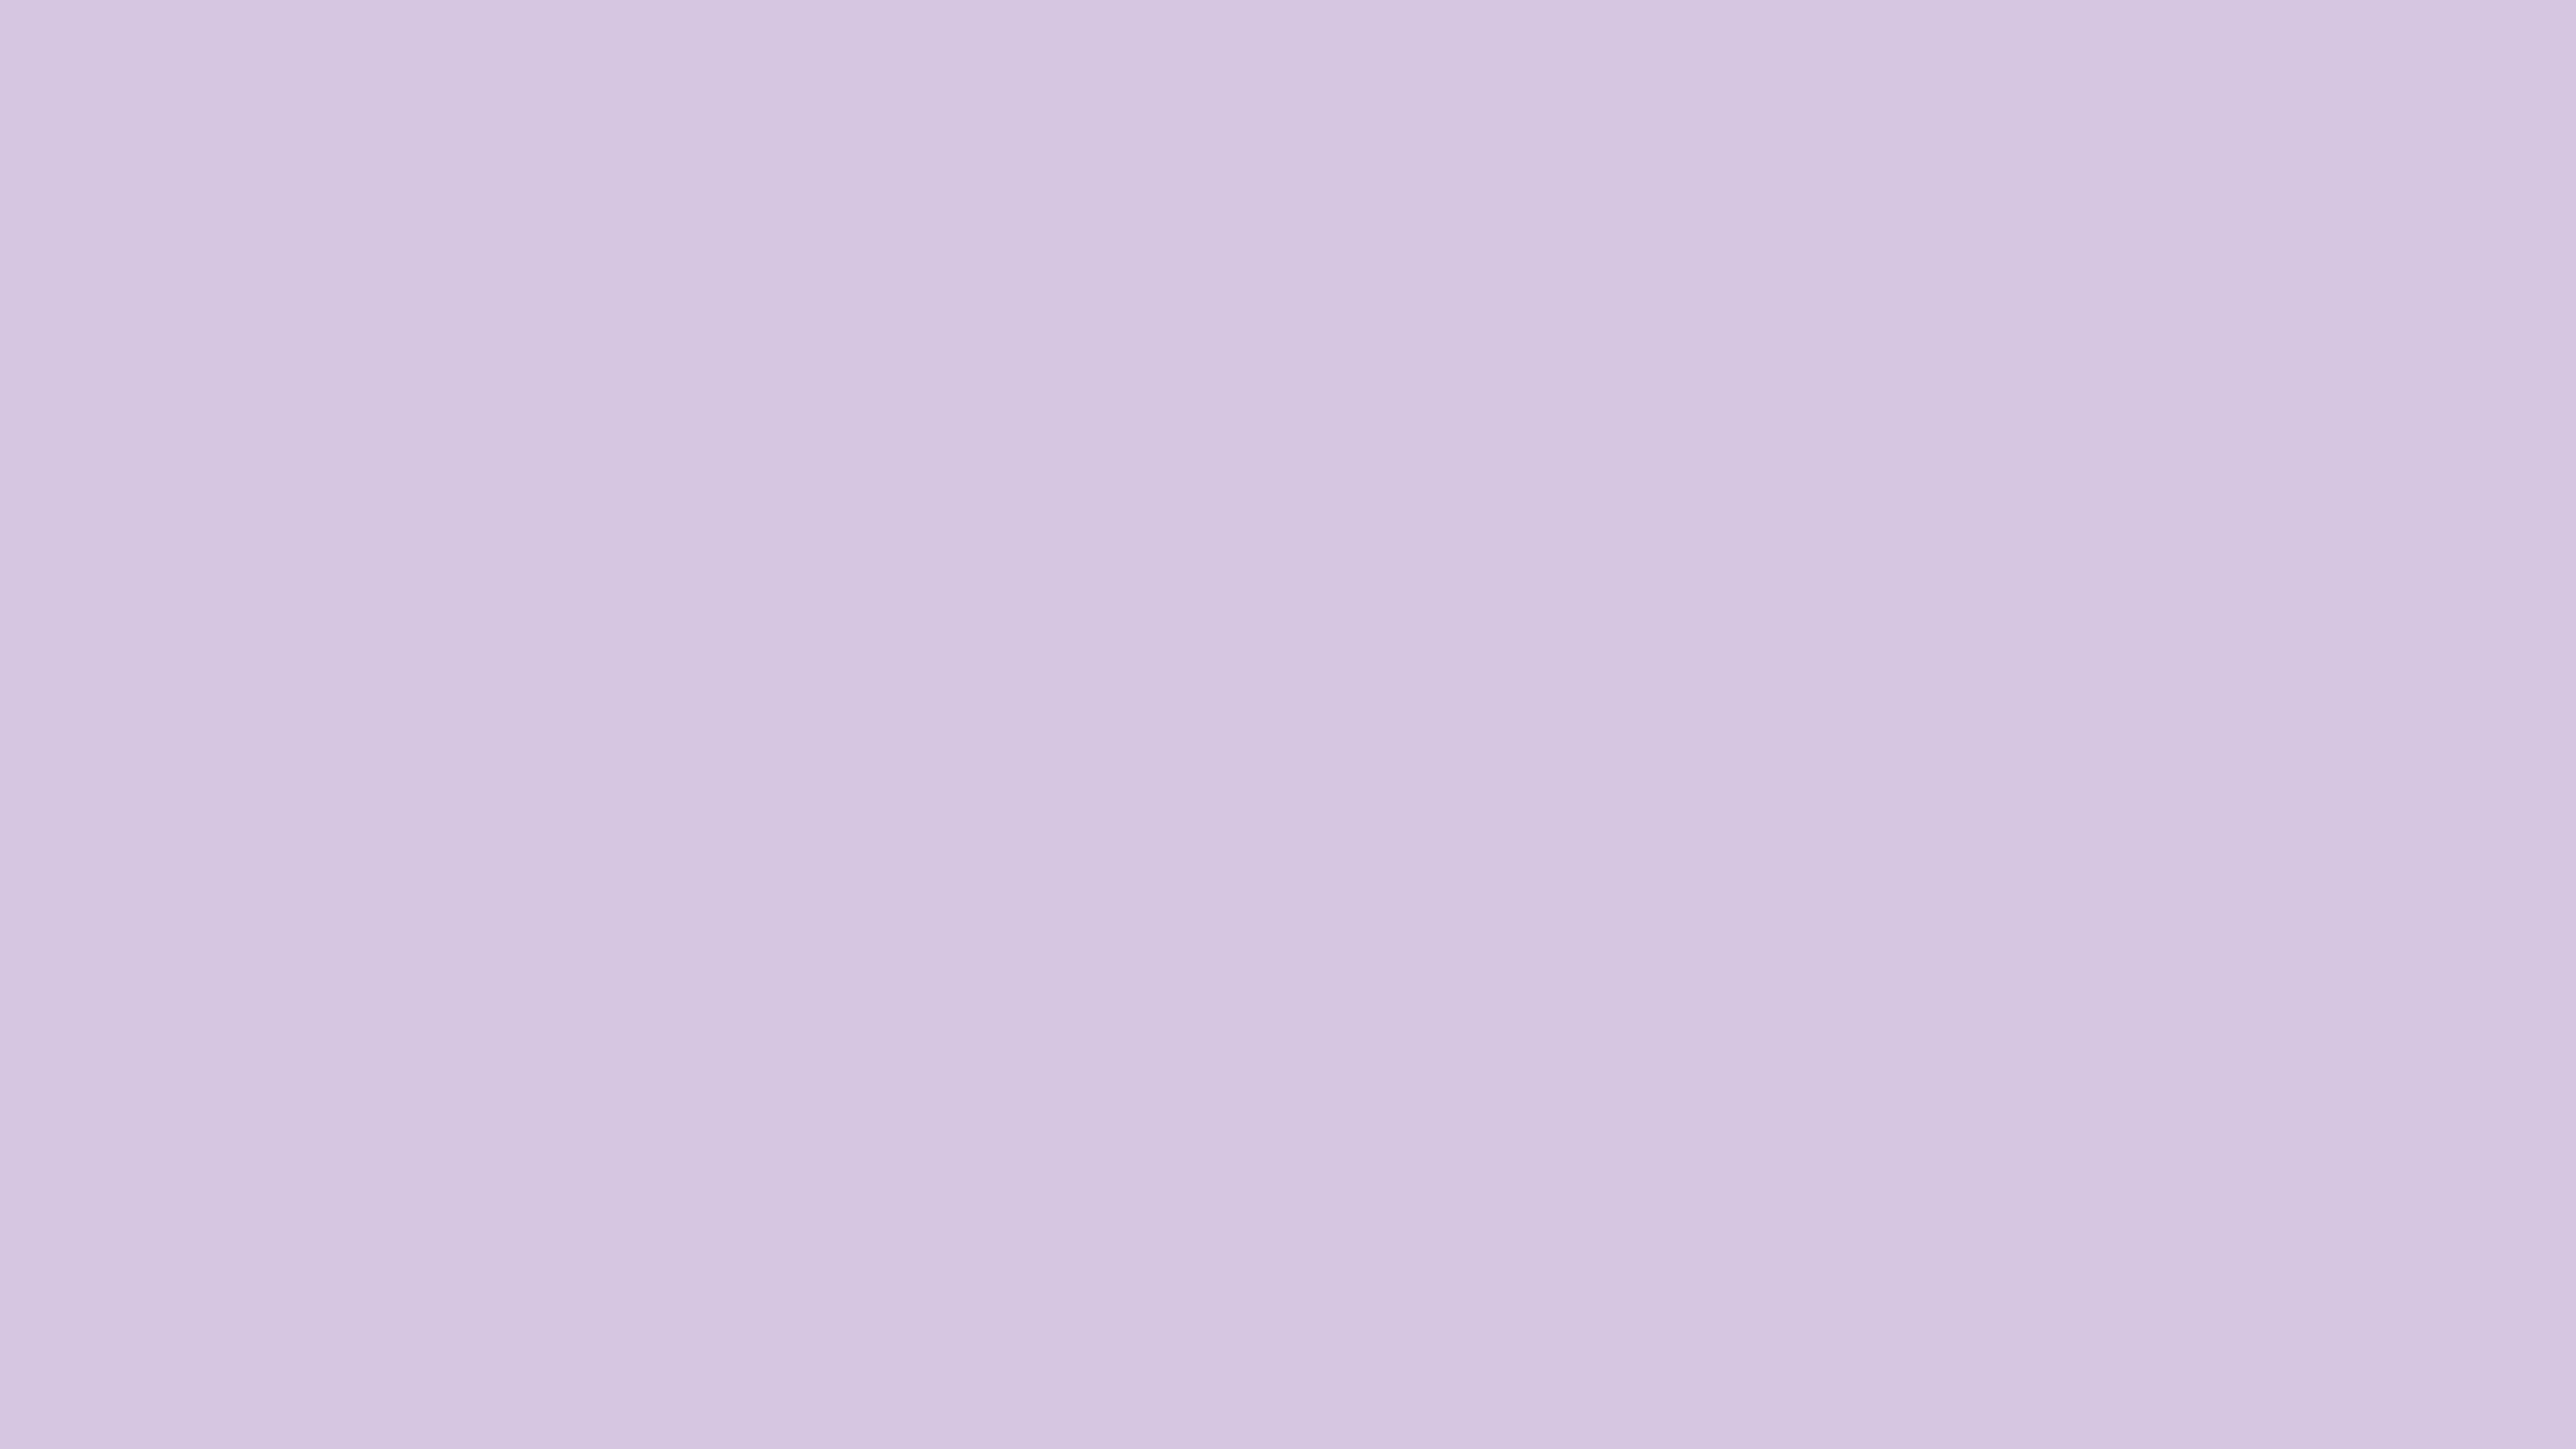 Oriental Blush Solid Color Background Image | Free Image Generator